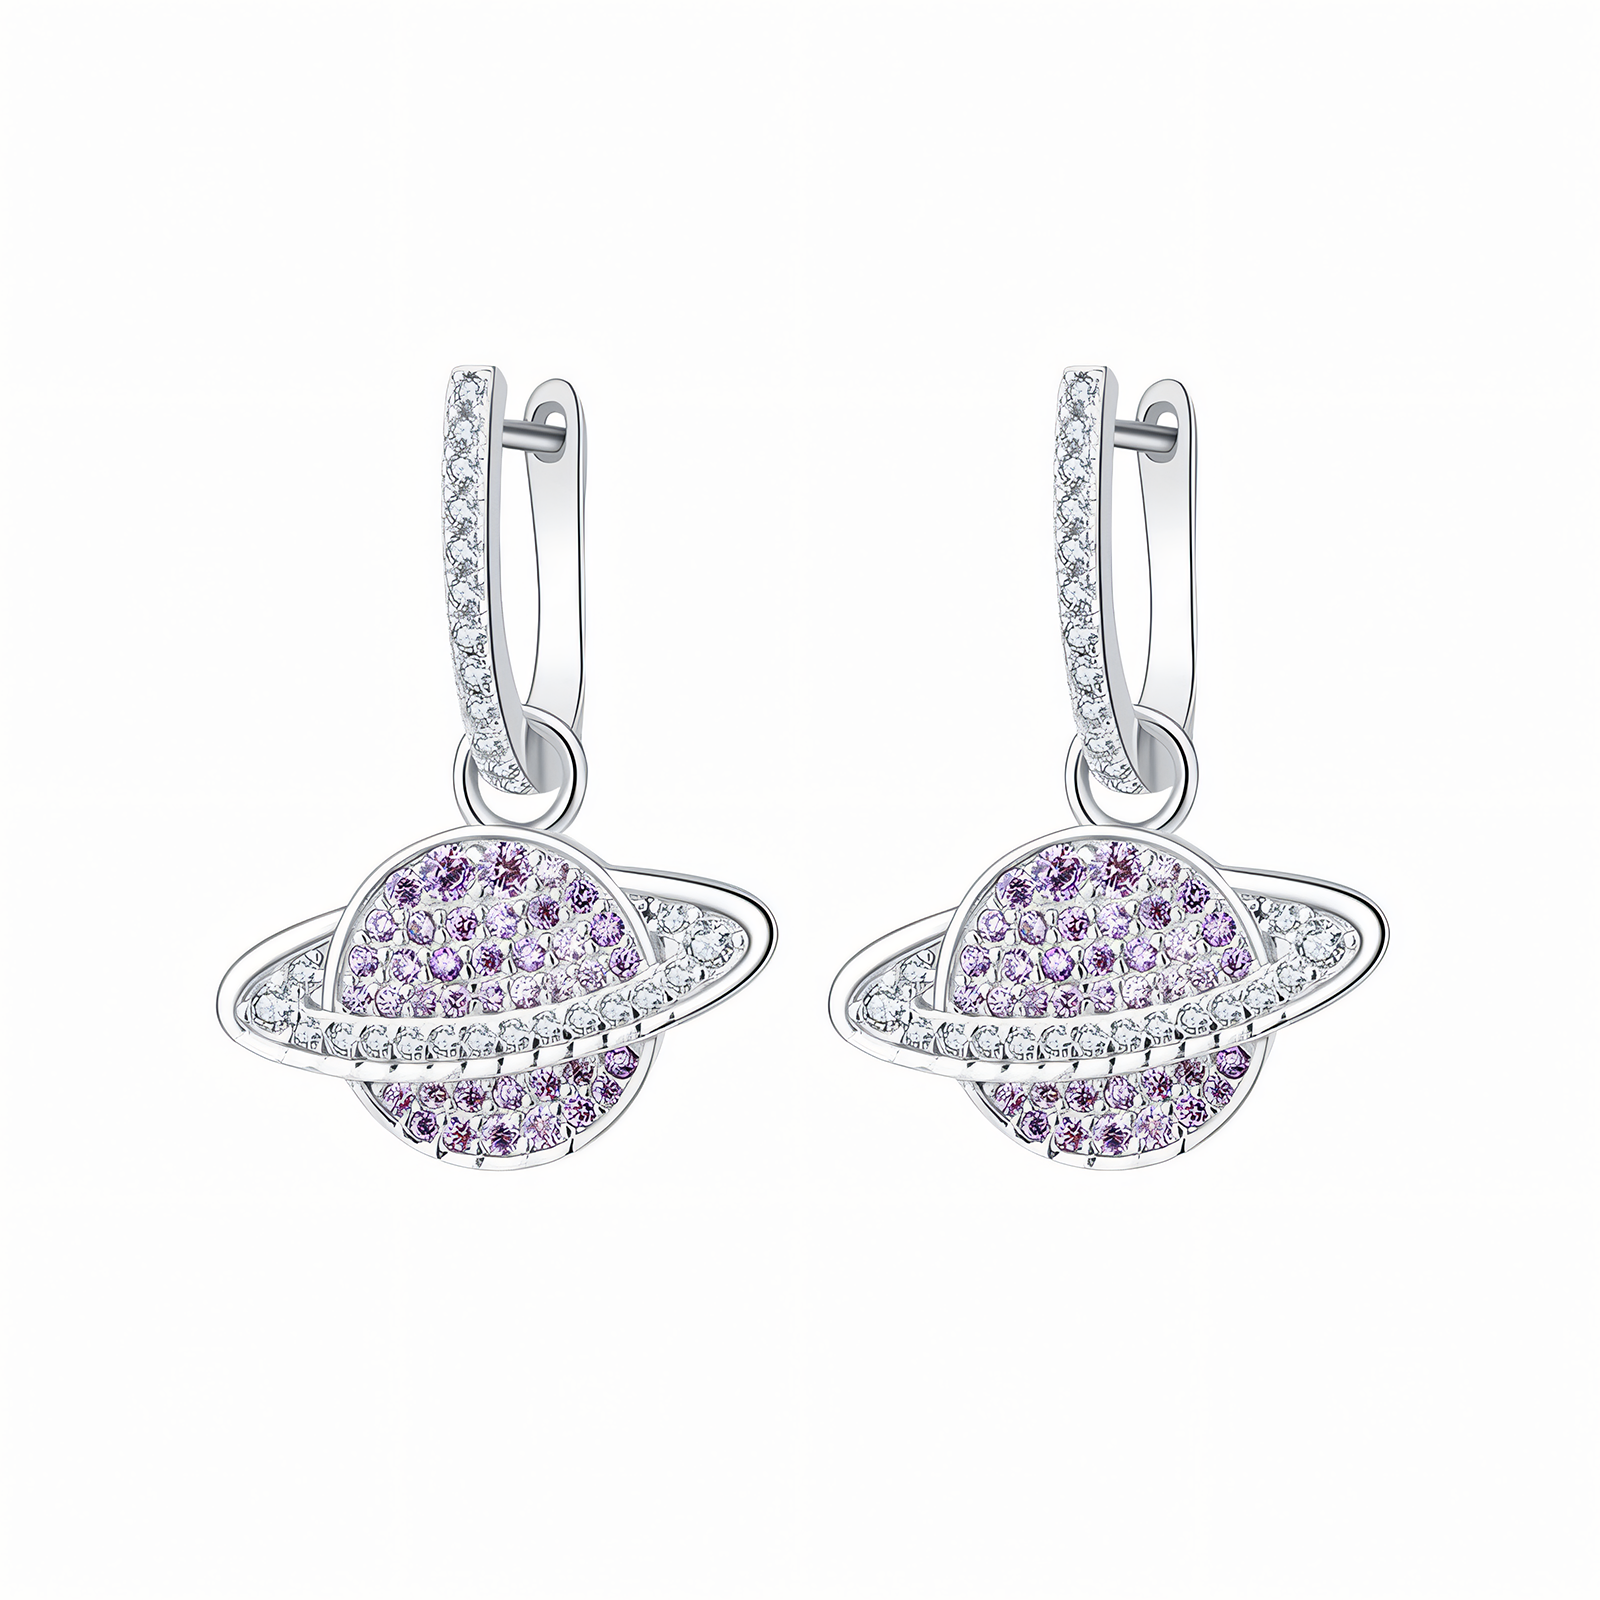 Astral Purple Zircon-Inlaid Sterling Silver Earrings